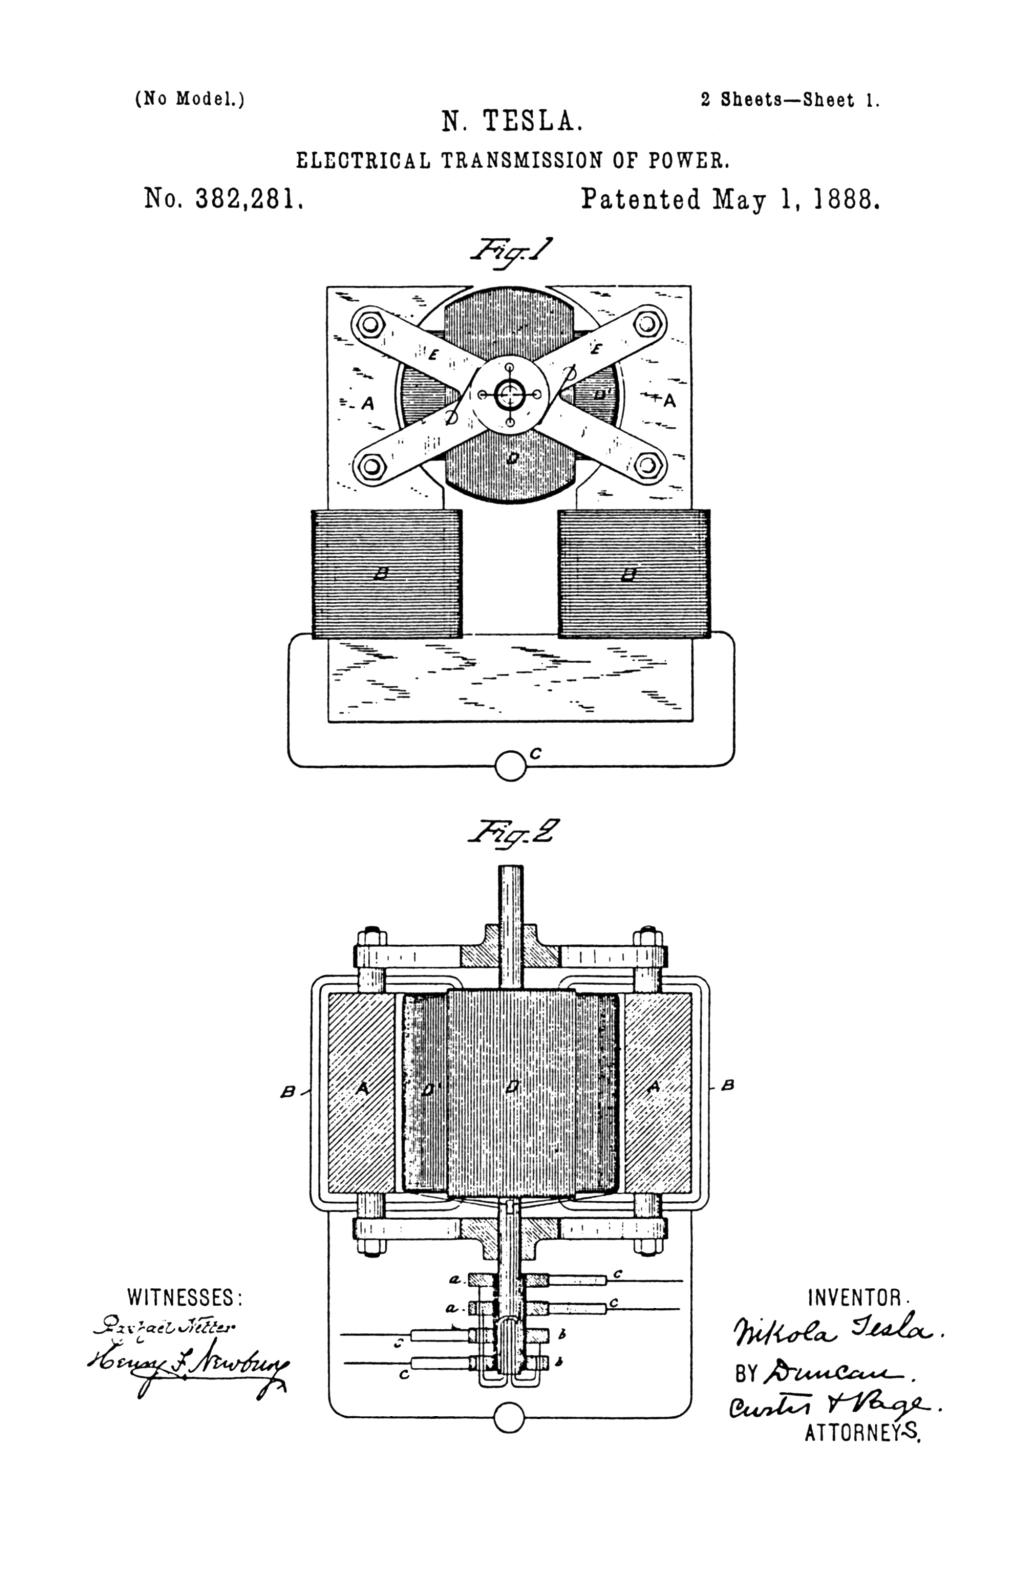 Nikola Tesla U.S. Patent 382,281 - Electrical Transmission of Power - Image 1